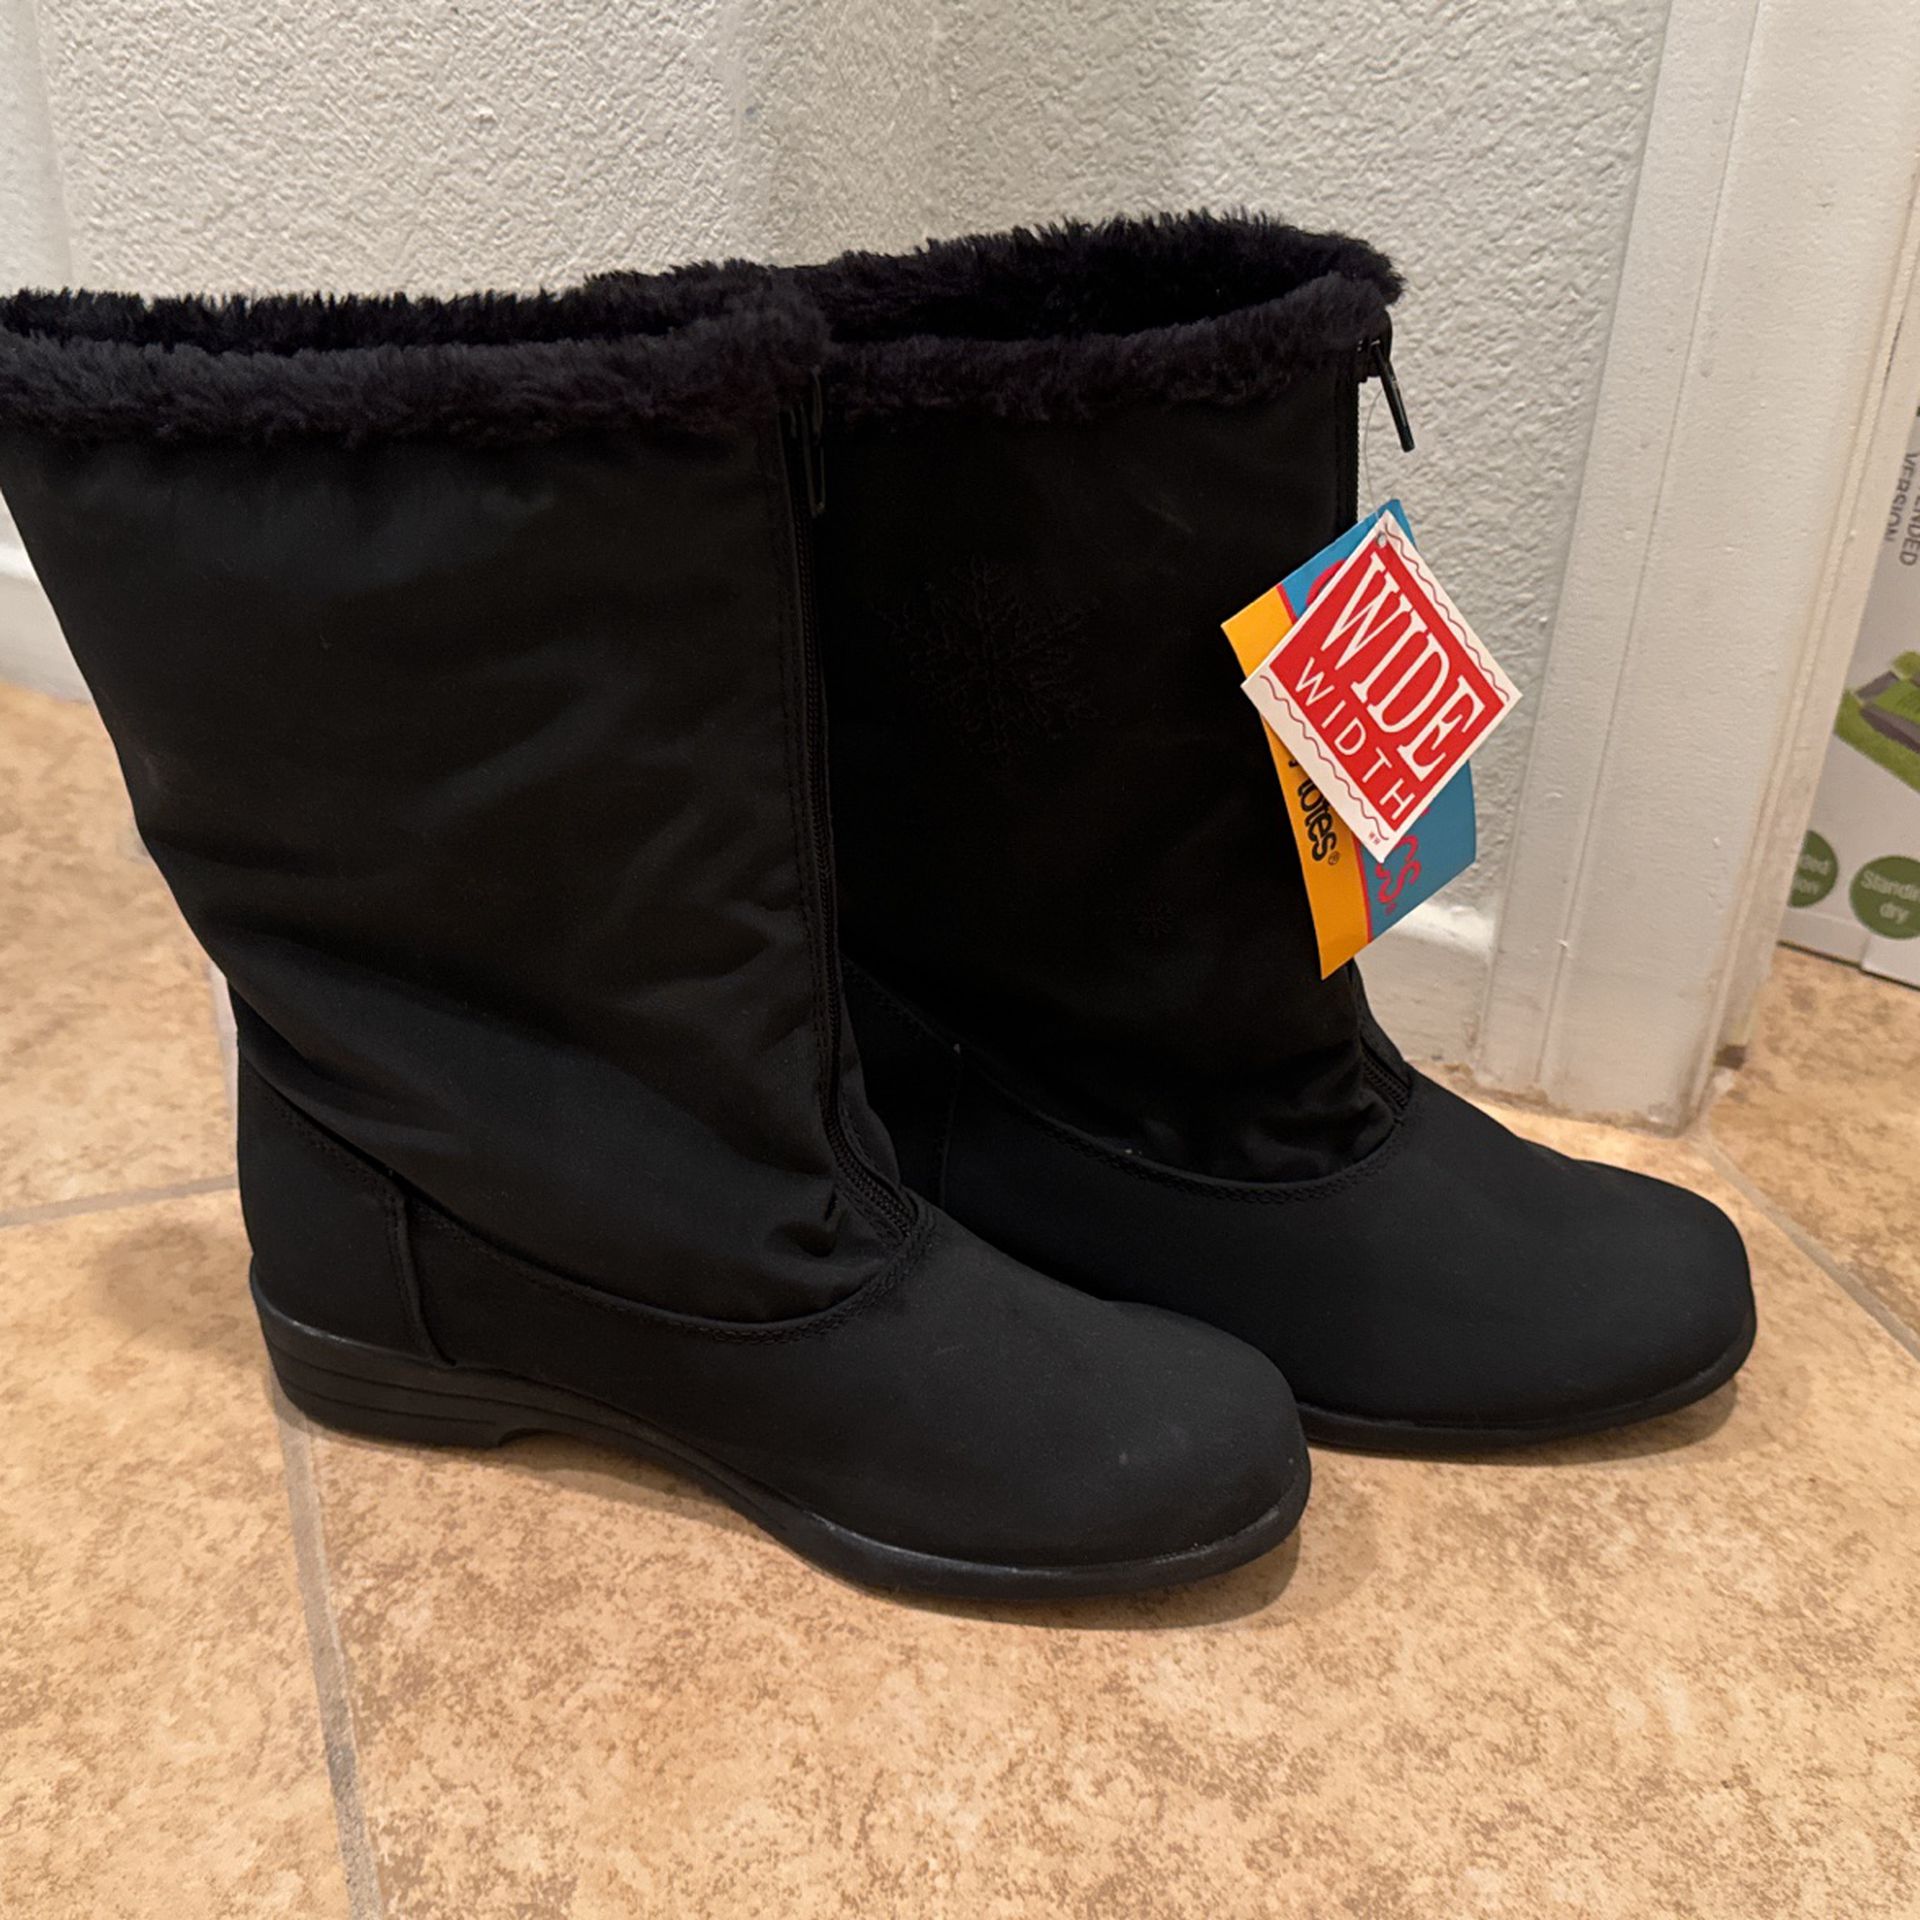 Brand New Rain Boot Black Size 8 W